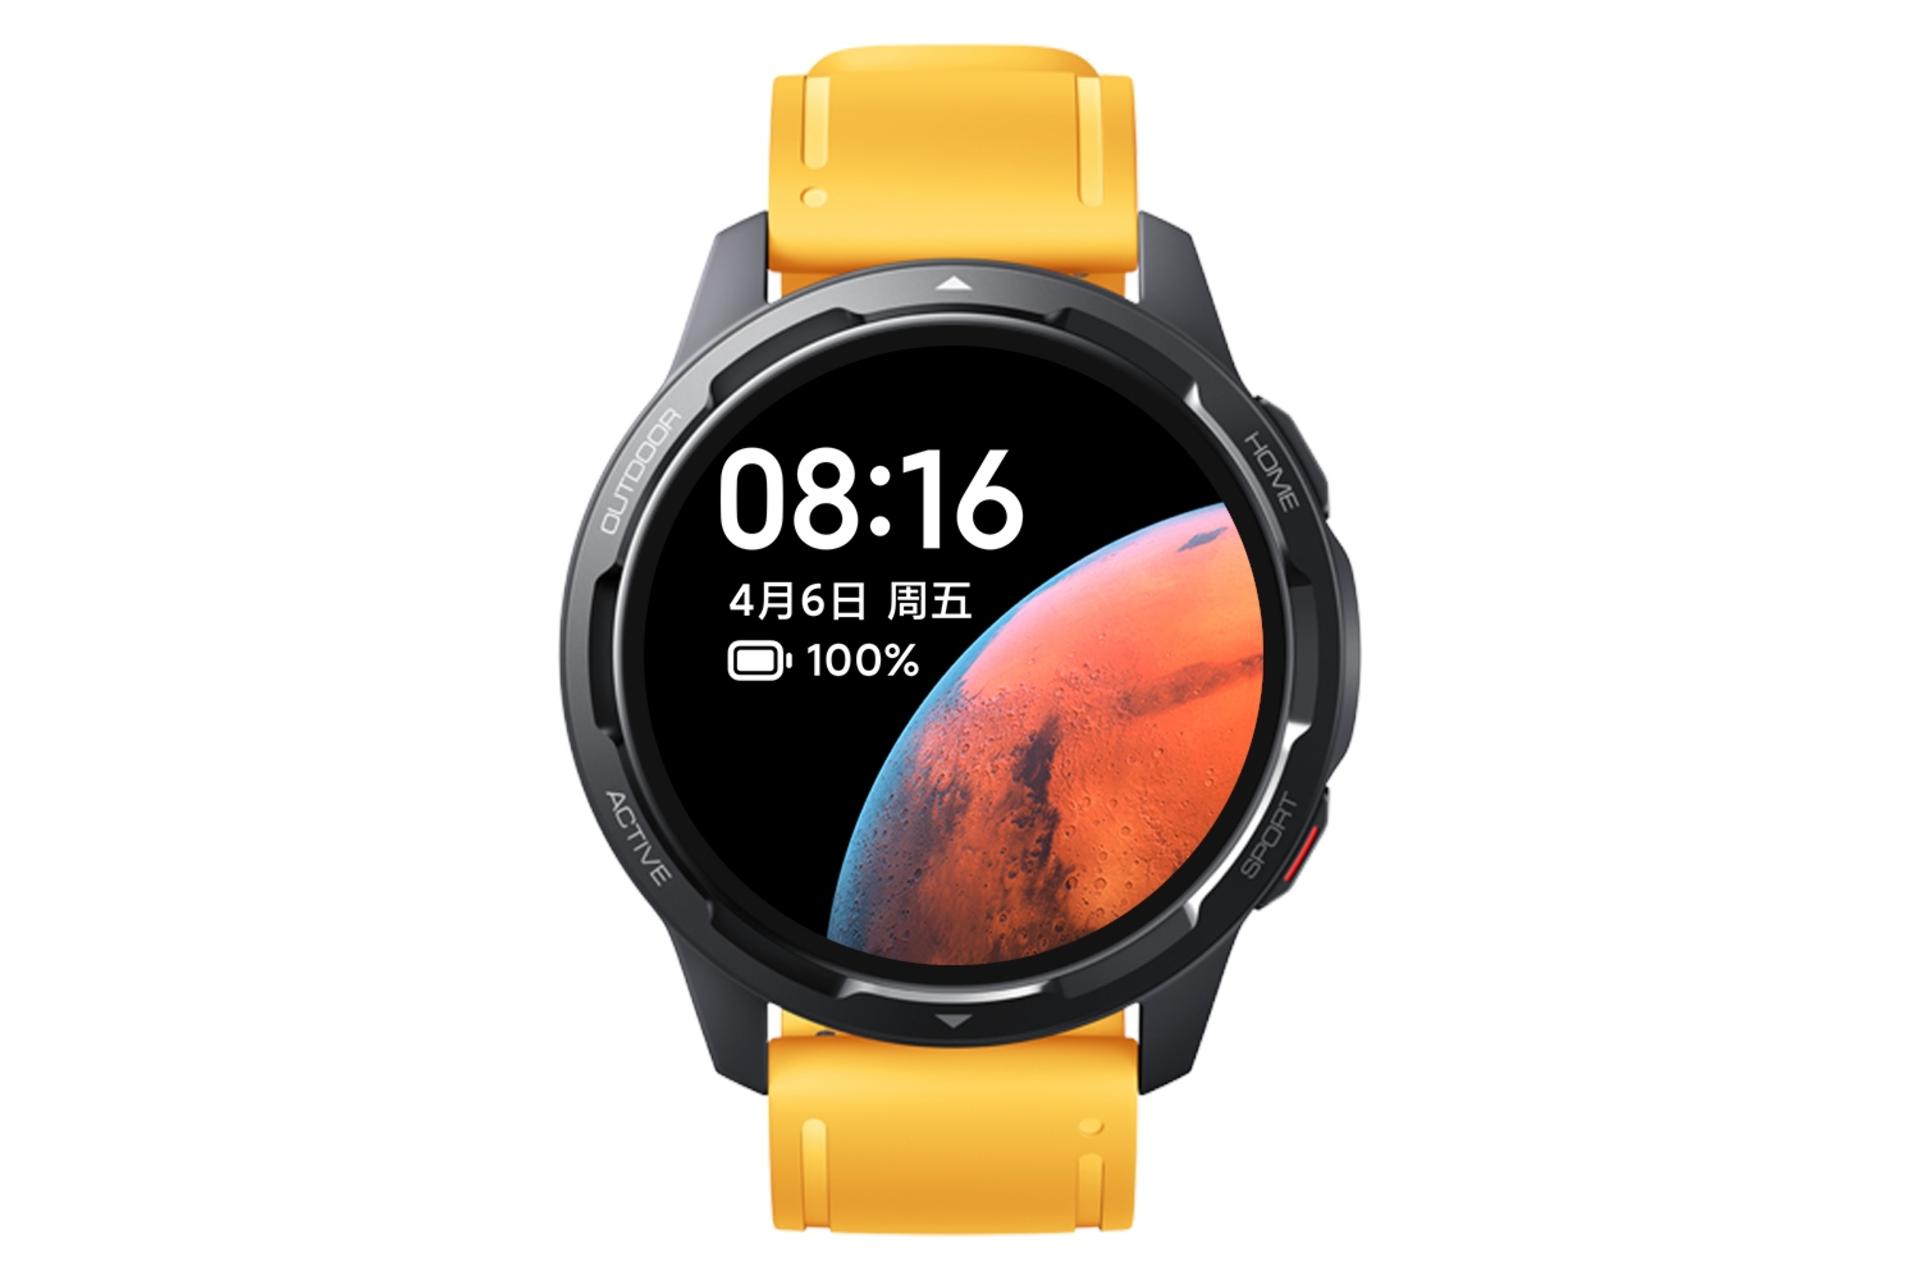 نمای روبرو واچ کالر 2 شیائومی / Xiaomi Watch Color 2